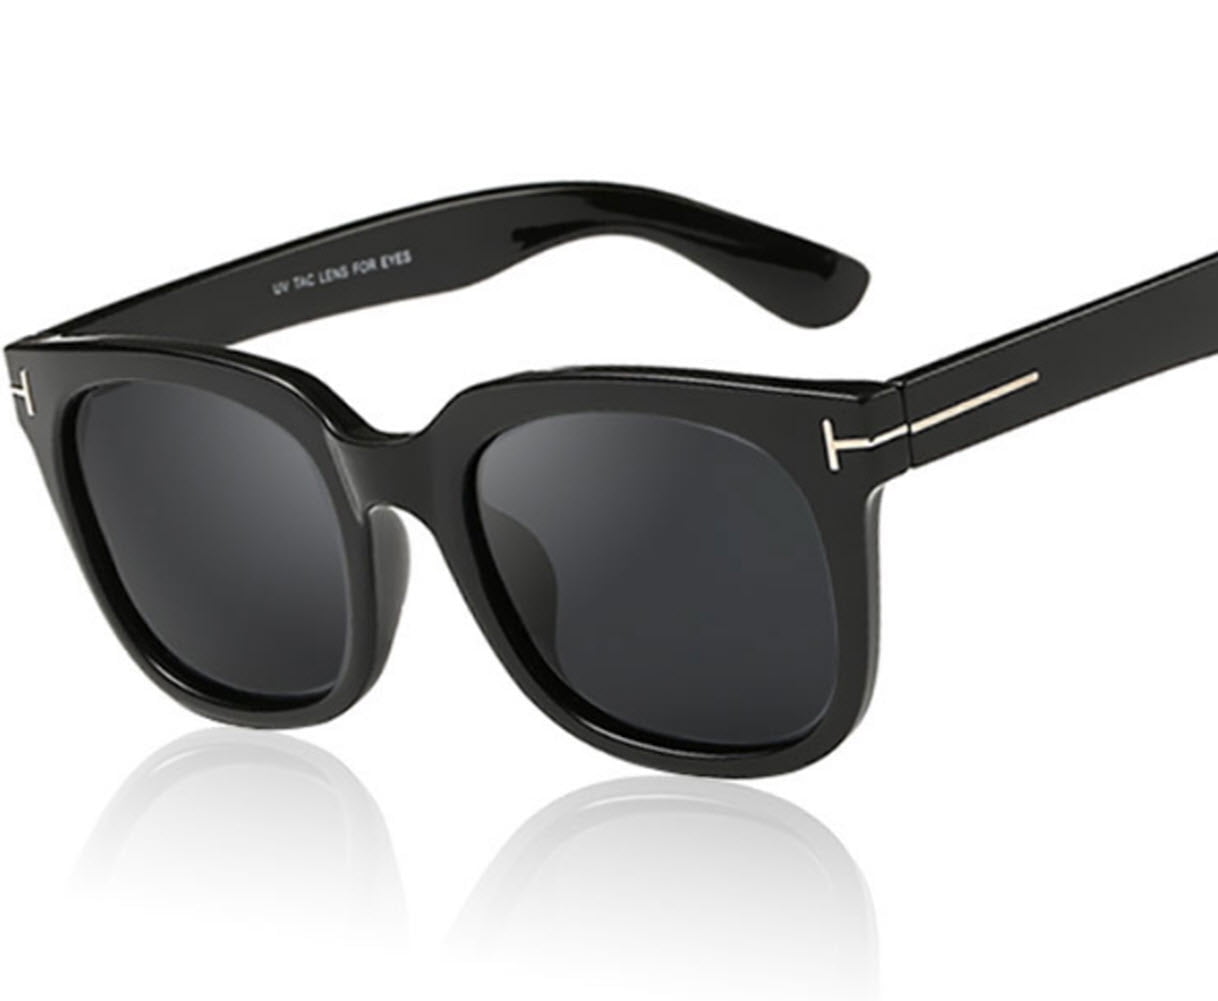 James Bond Style Square Black Sunglasses 007 Spectre Movie Costume Glasses